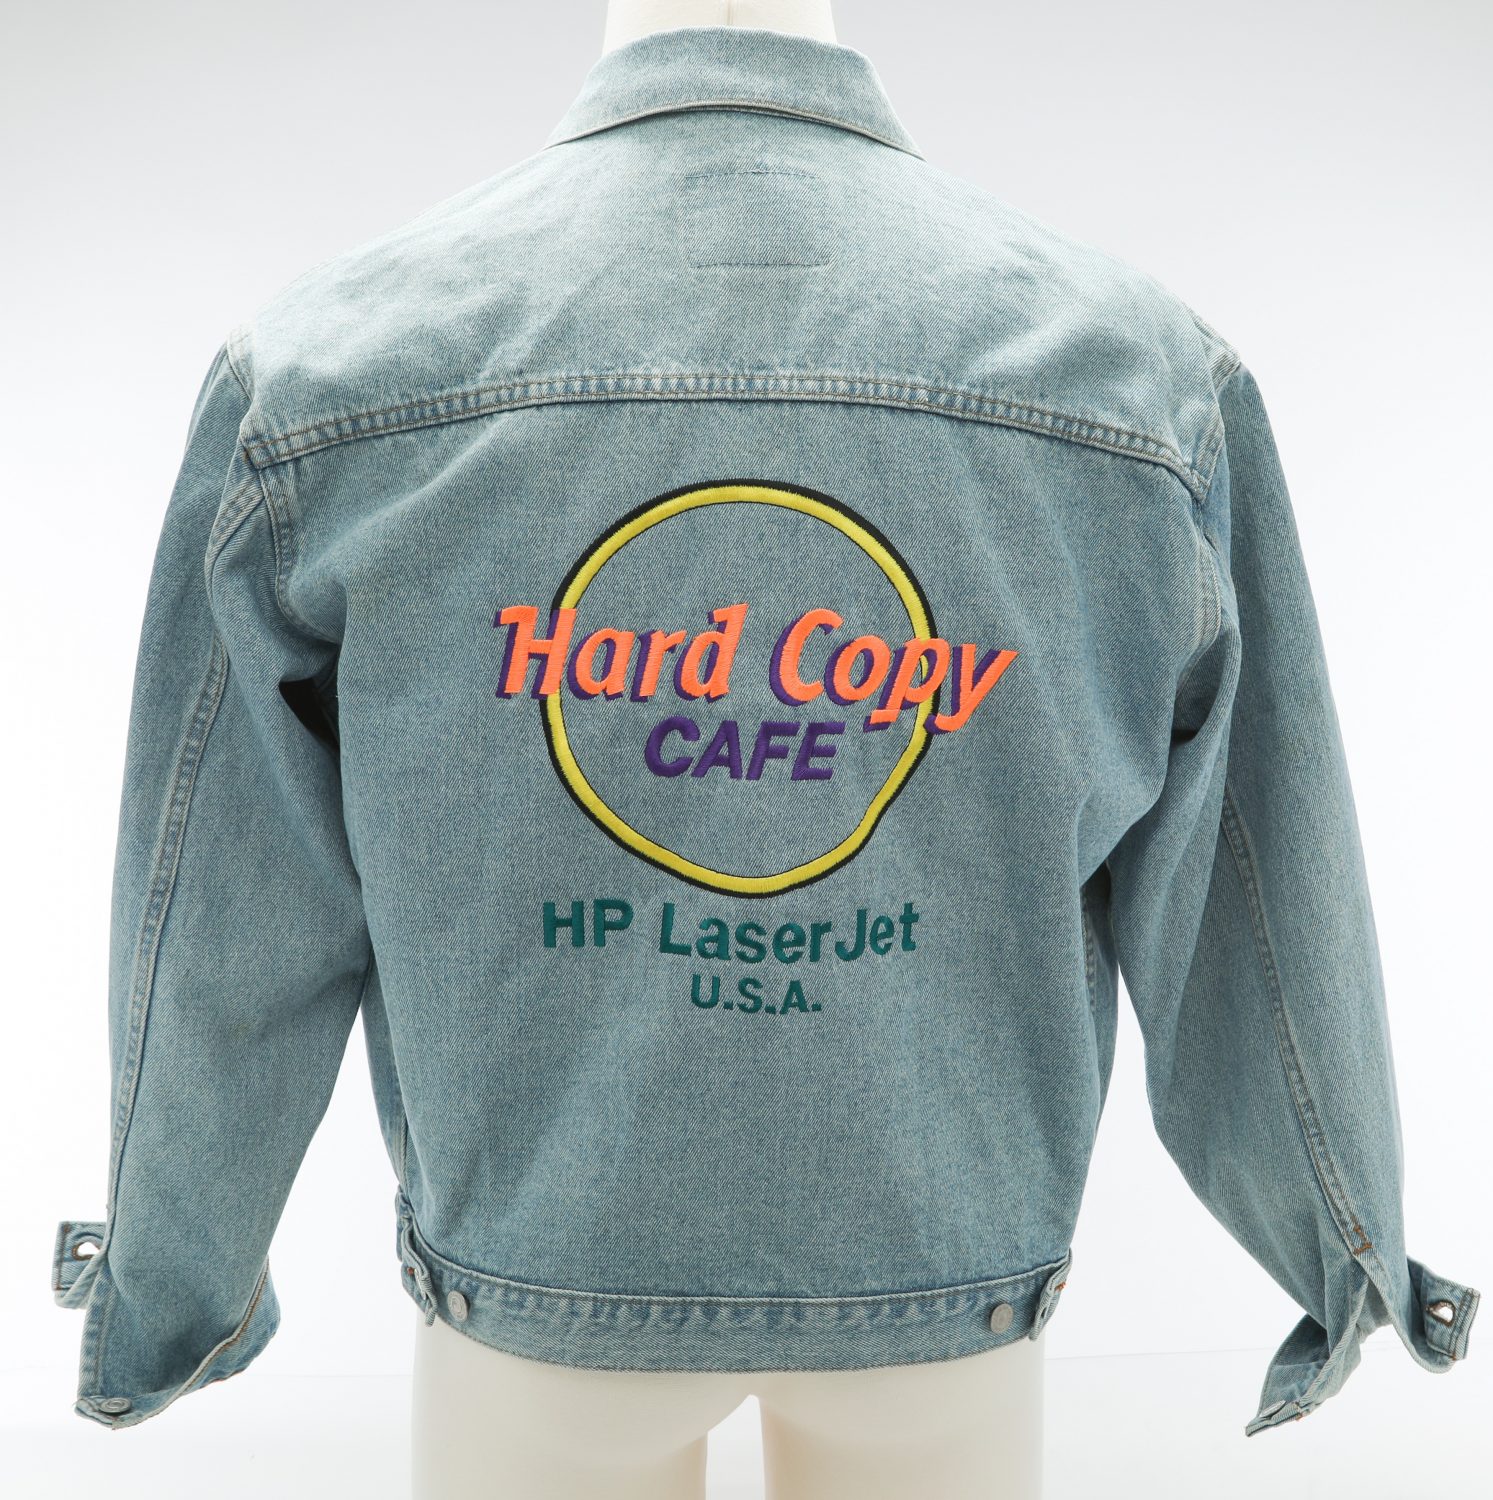 Back of the LaserJet branded jacket featuring a Hard Copy Café logo with HP LaserJet USA printed underneath.